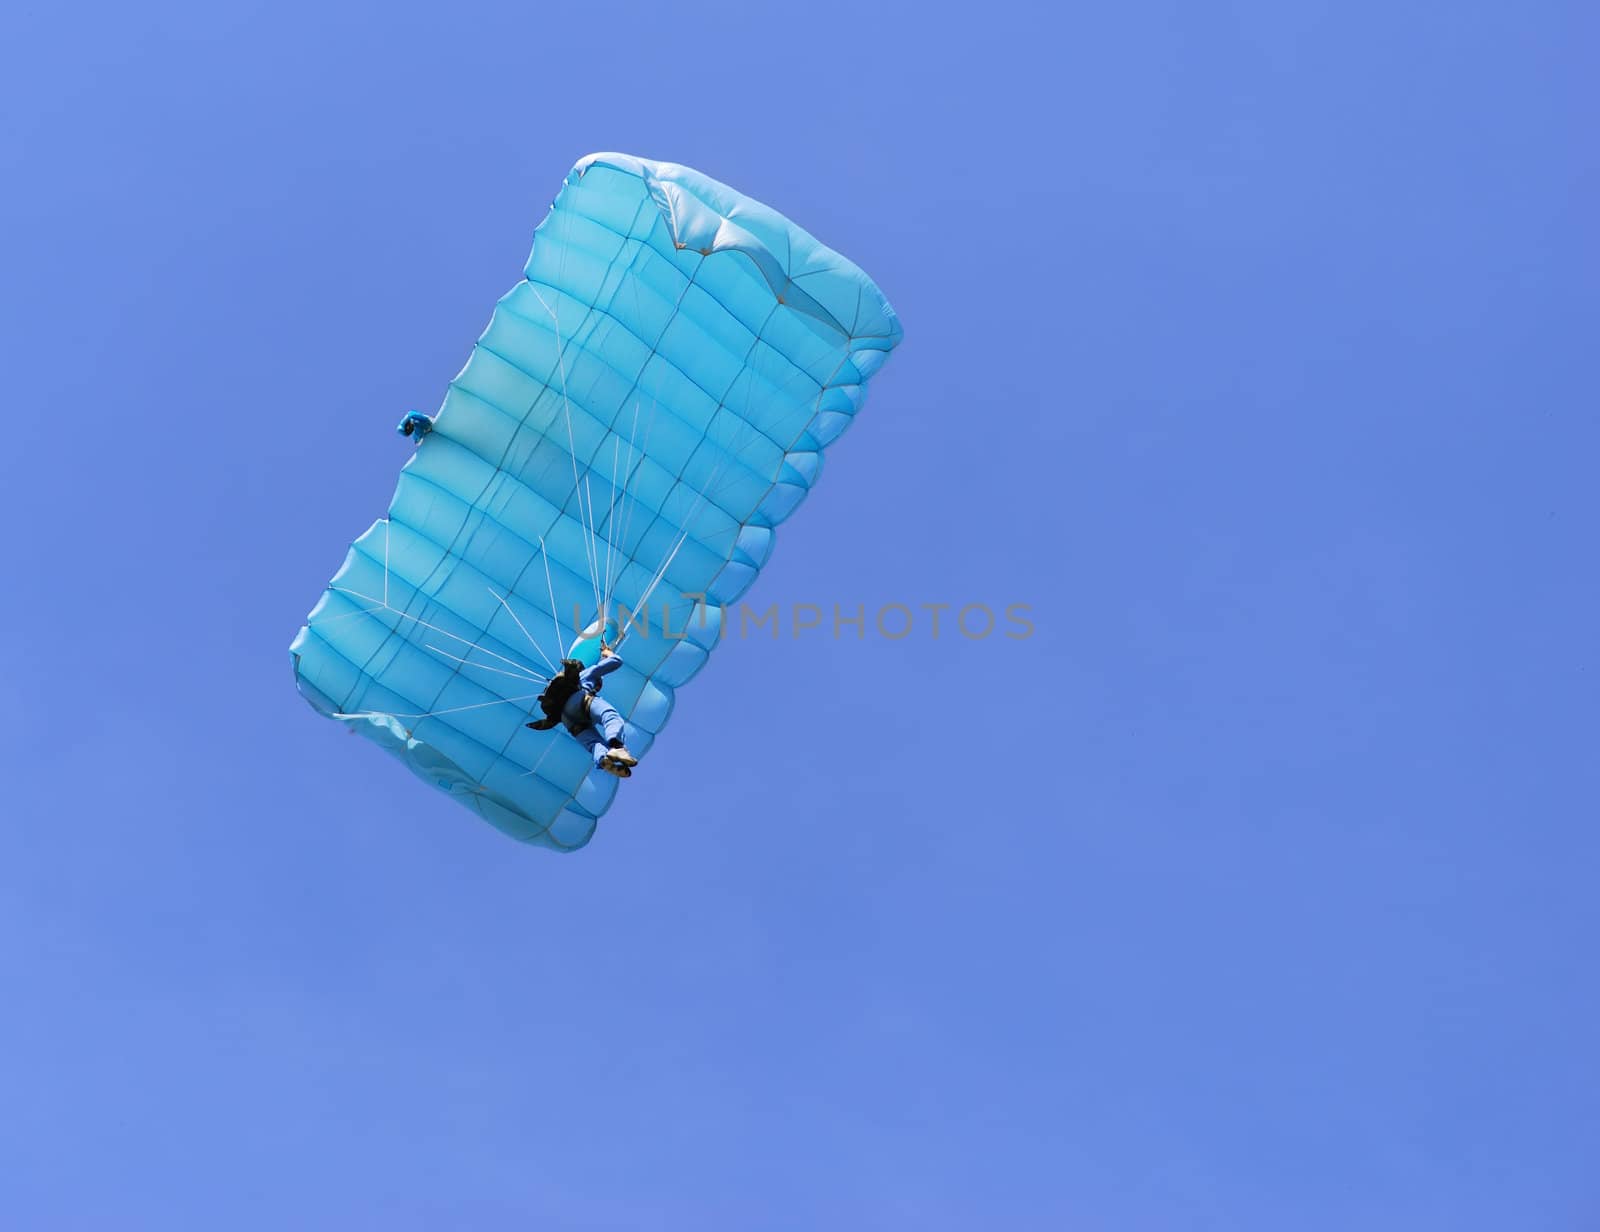 Blue parachute by whitechild